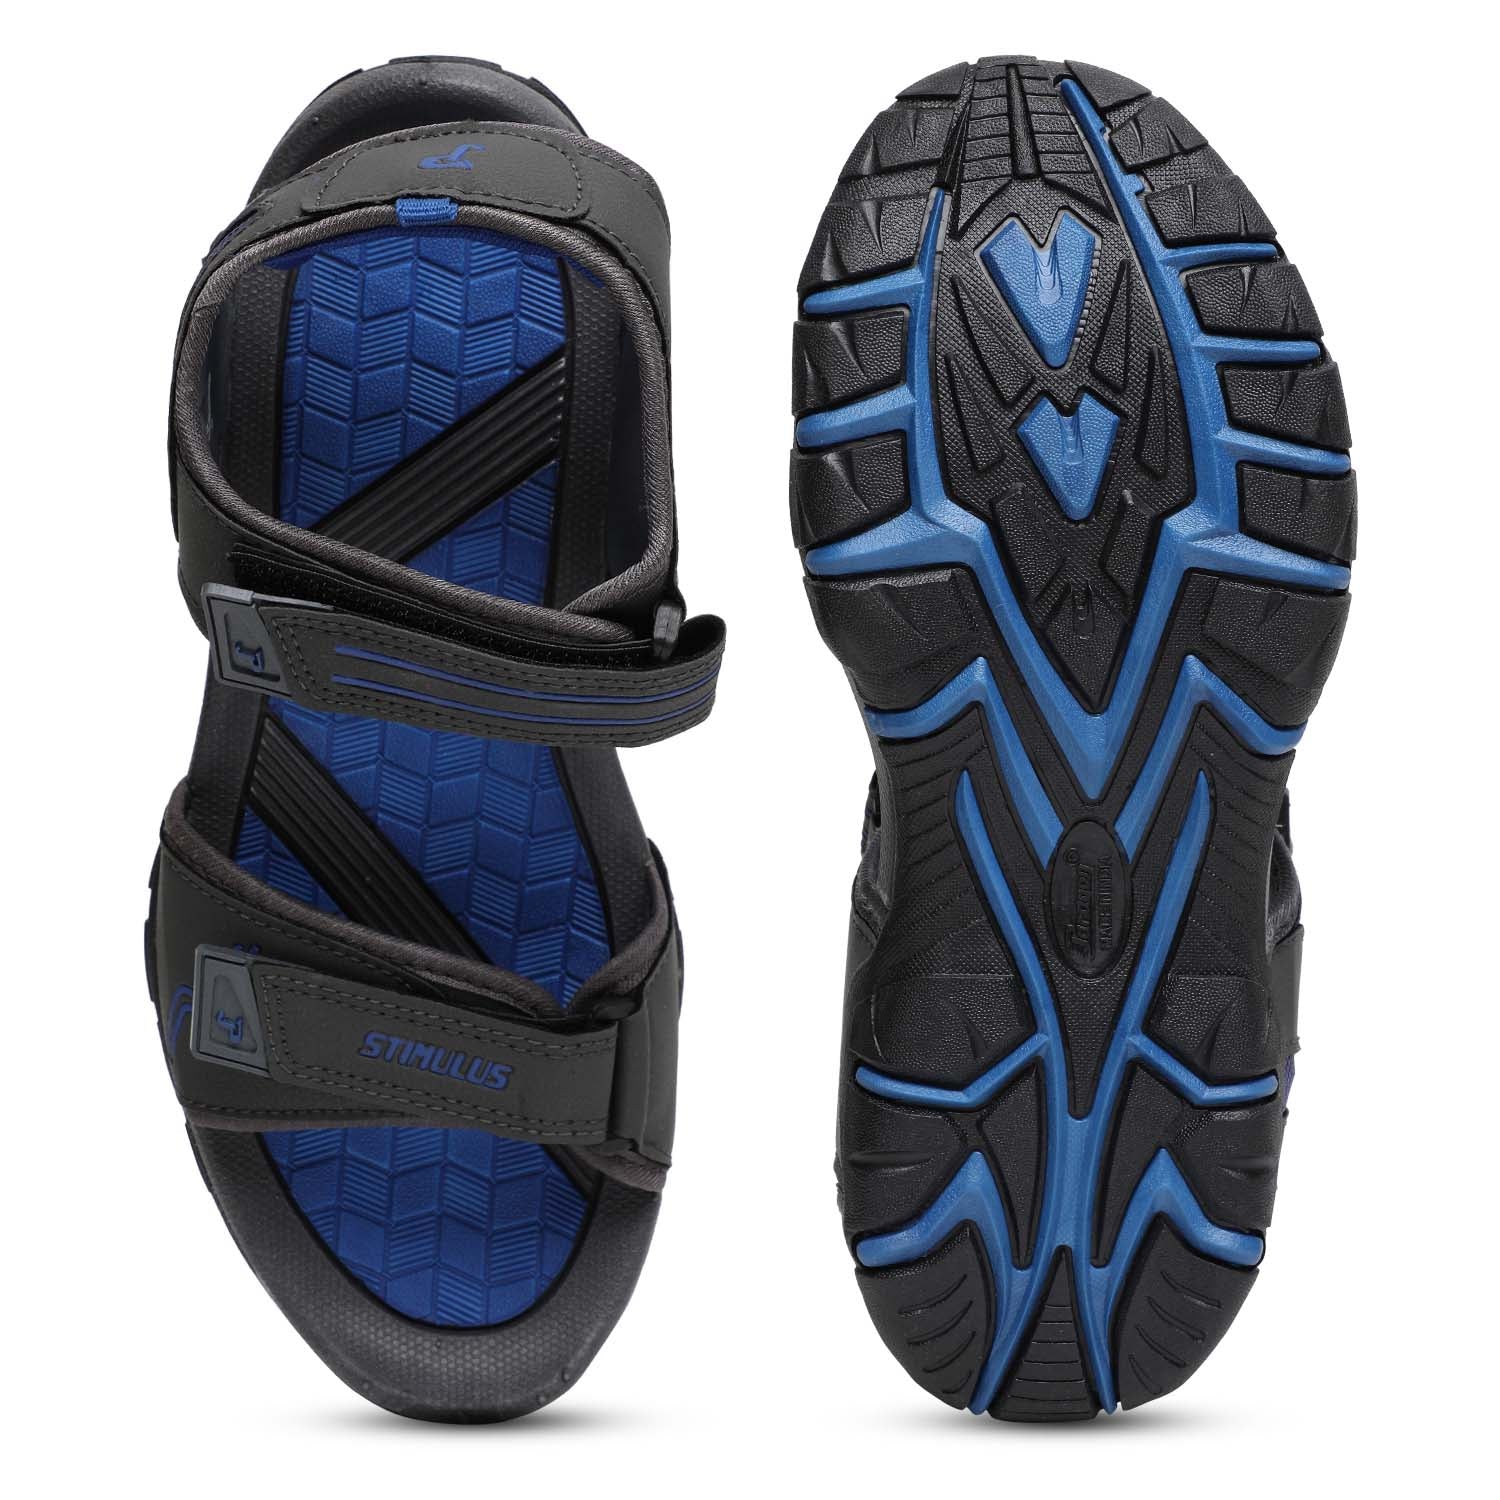 Stimulus FB9070G Grey And Blue Stylish Lightweight Dailywear Sports Sandals For Men